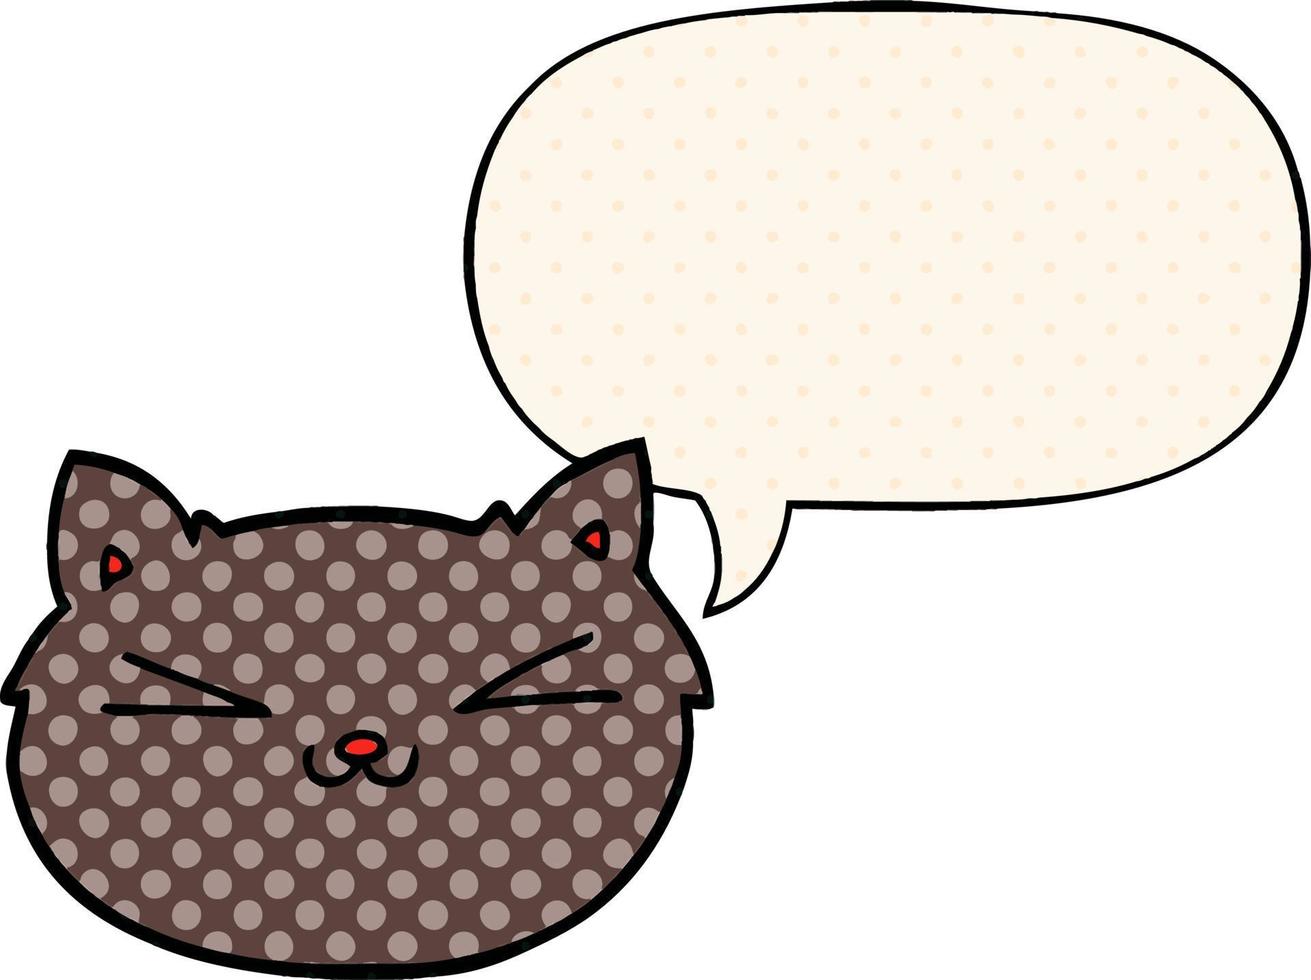 gato de desenho animado feliz e bolha de fala no estilo de quadrinhos vetor